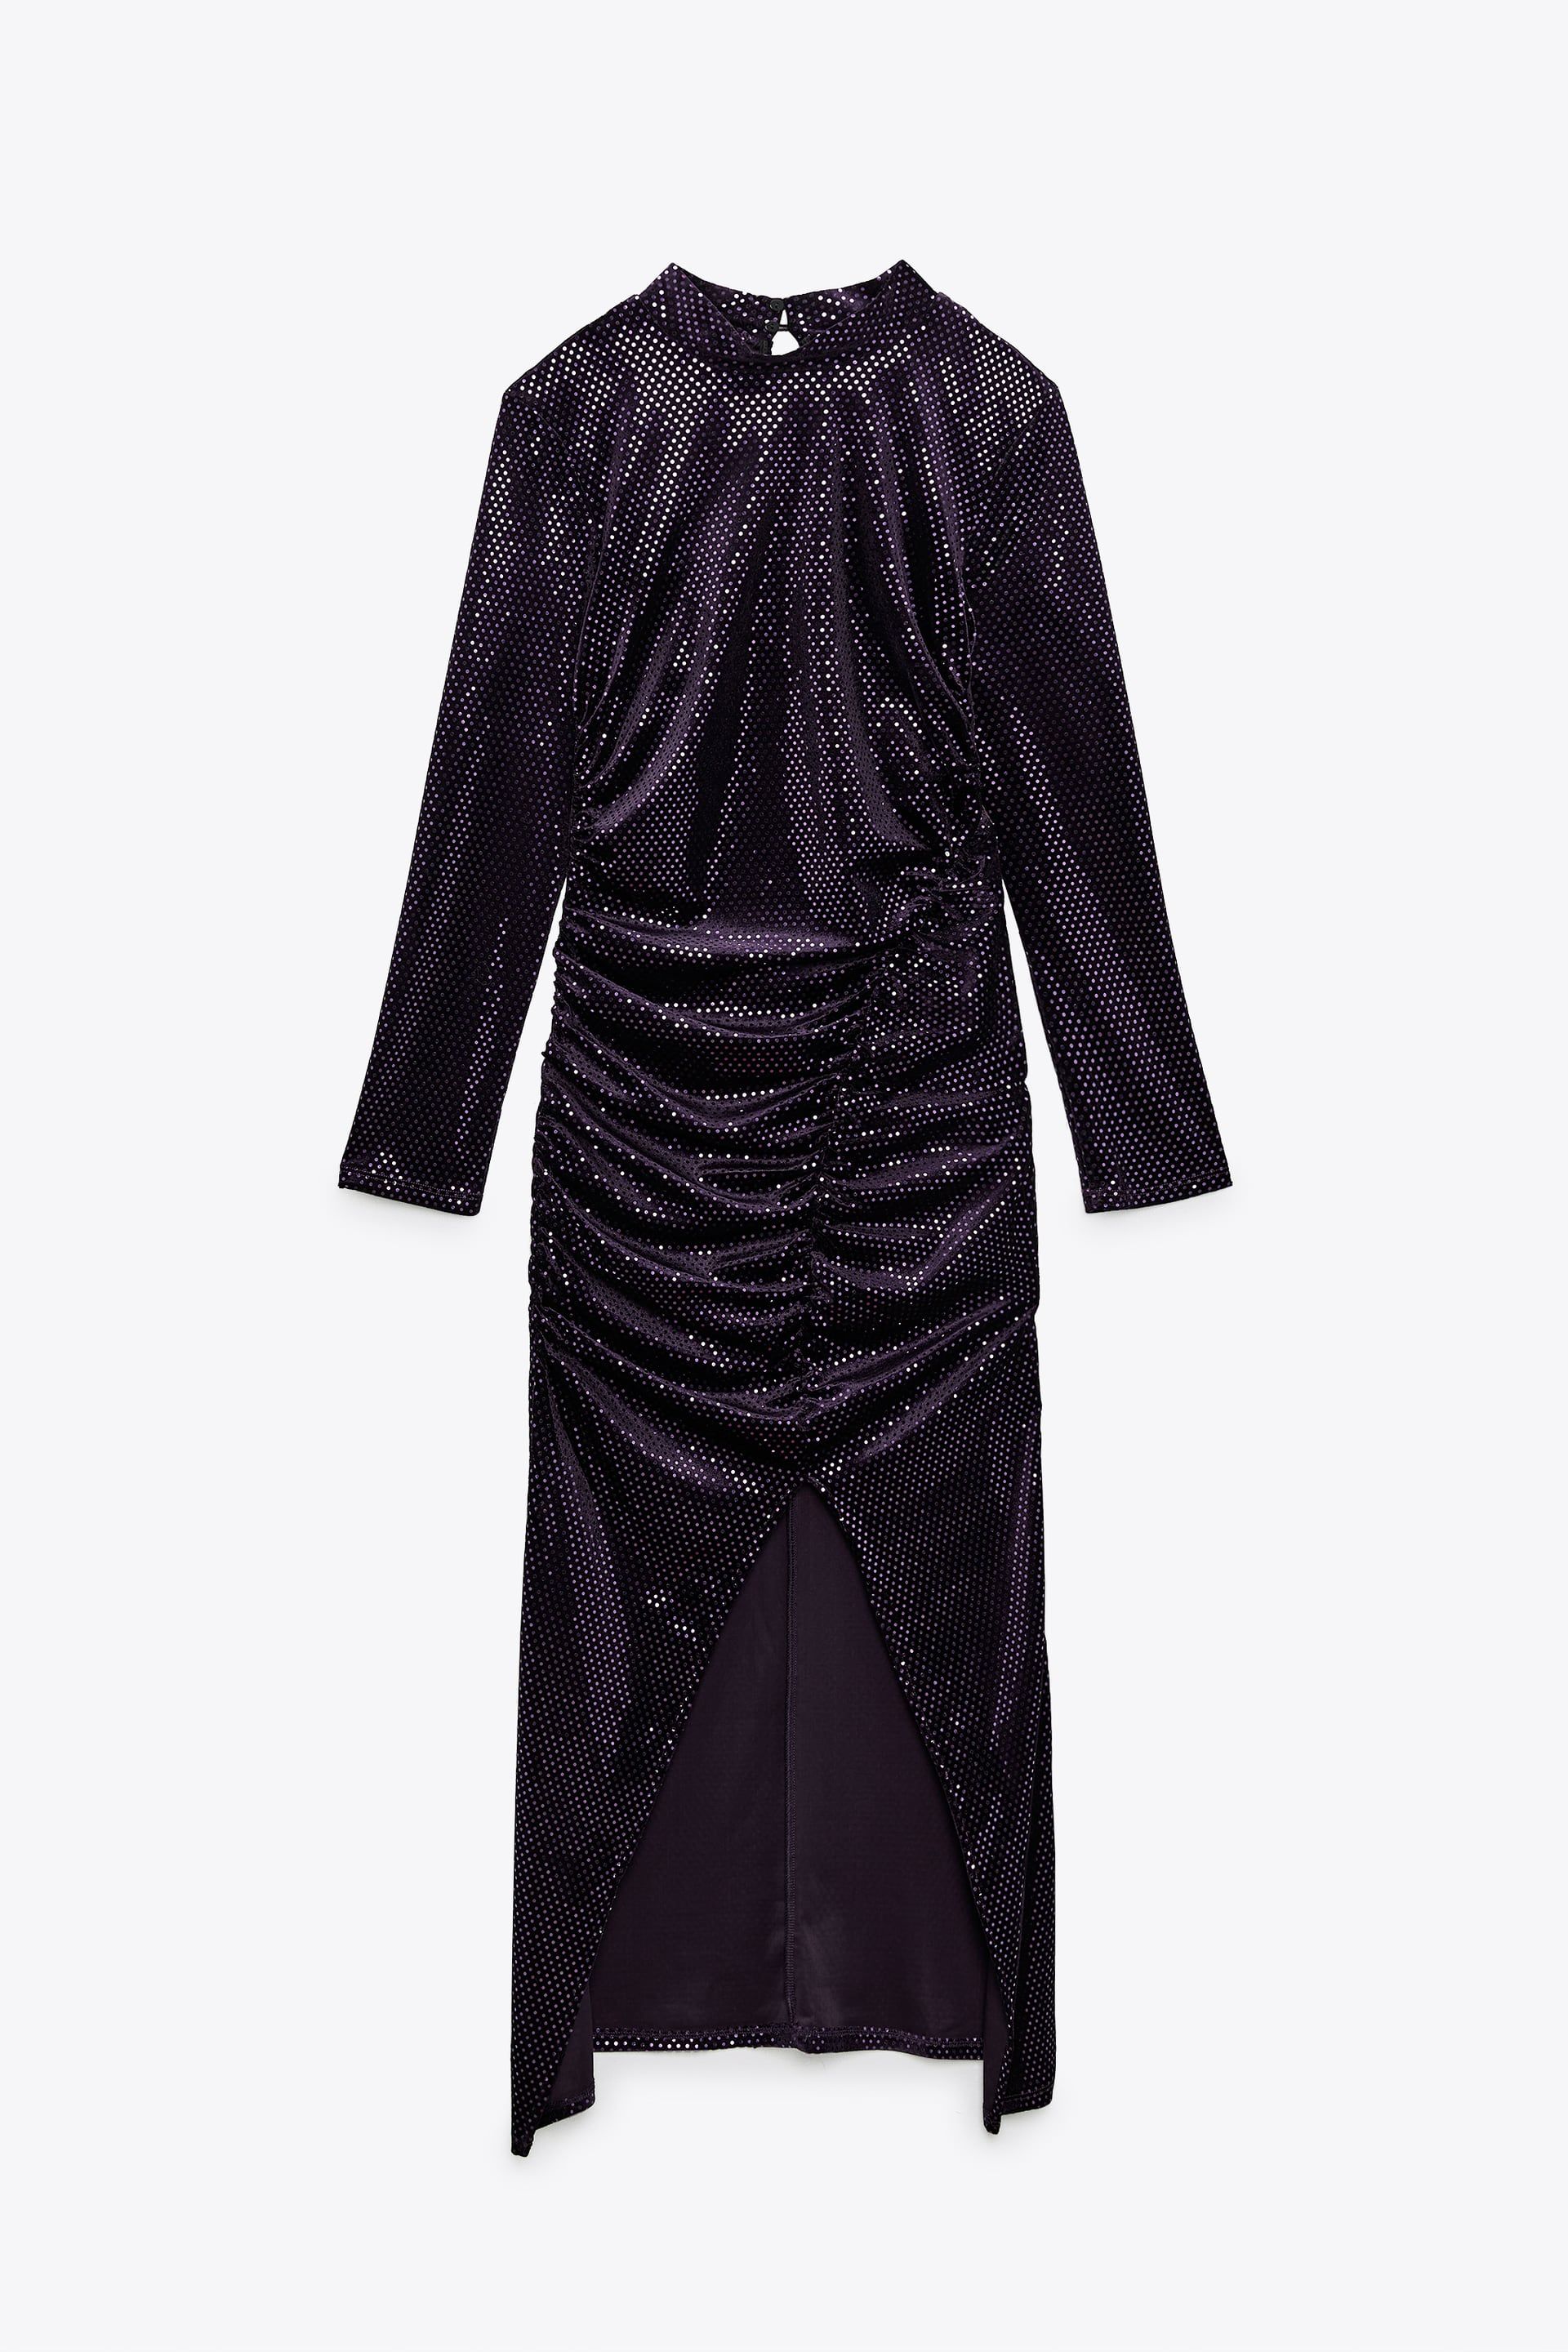 15 vestidos de fiesta de Zara para